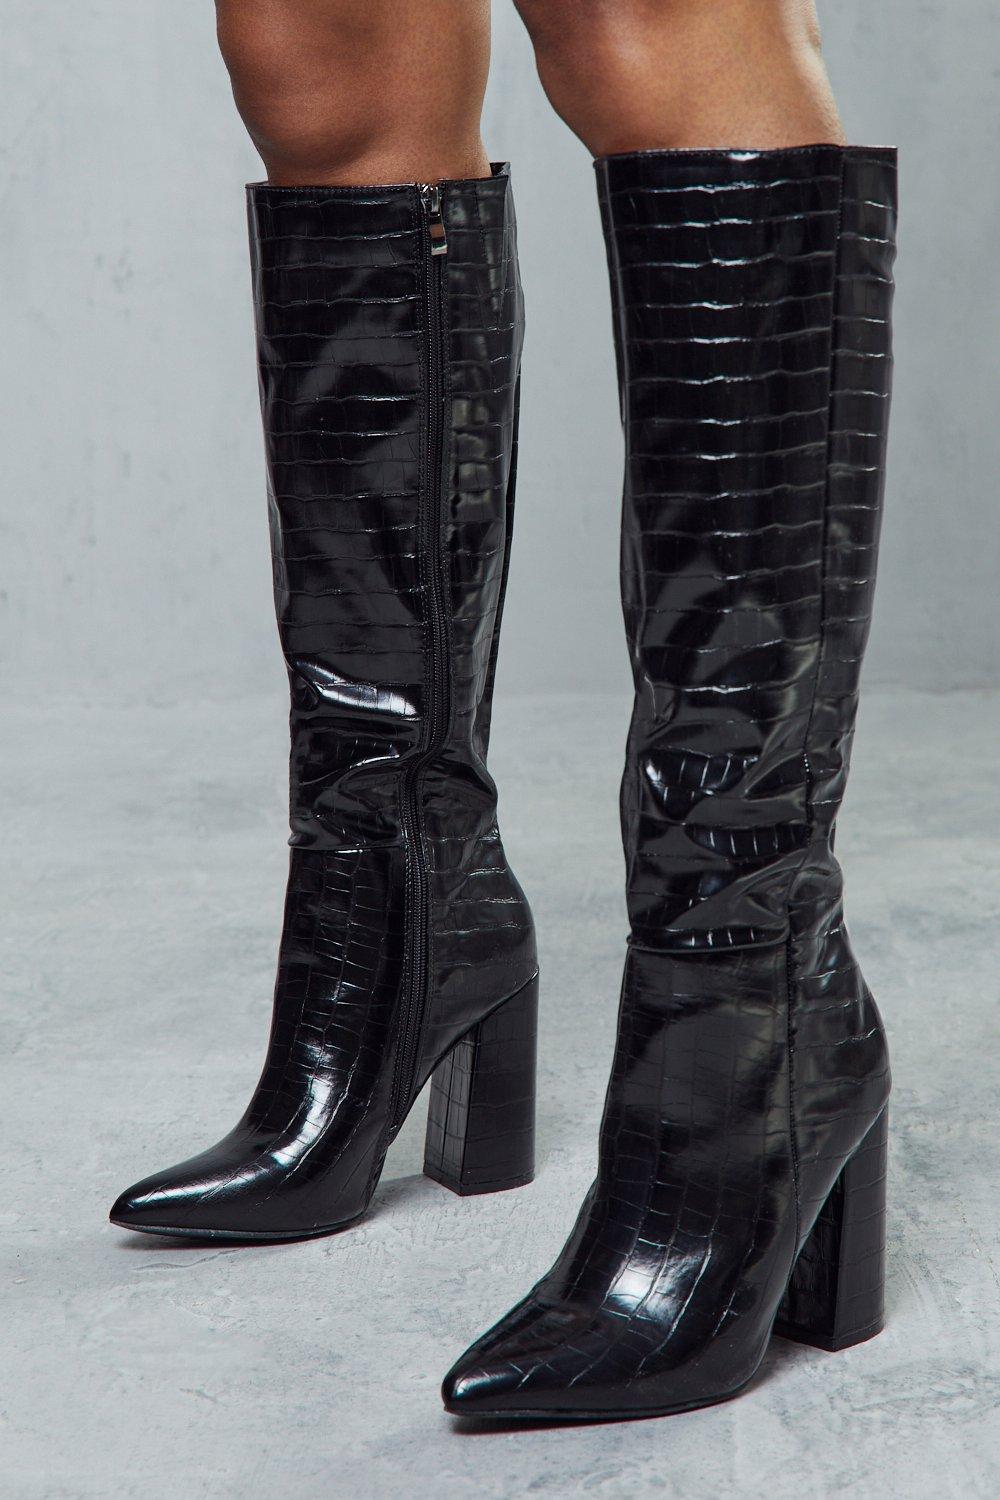 womens croc knee high heeled boots - black - 8, black